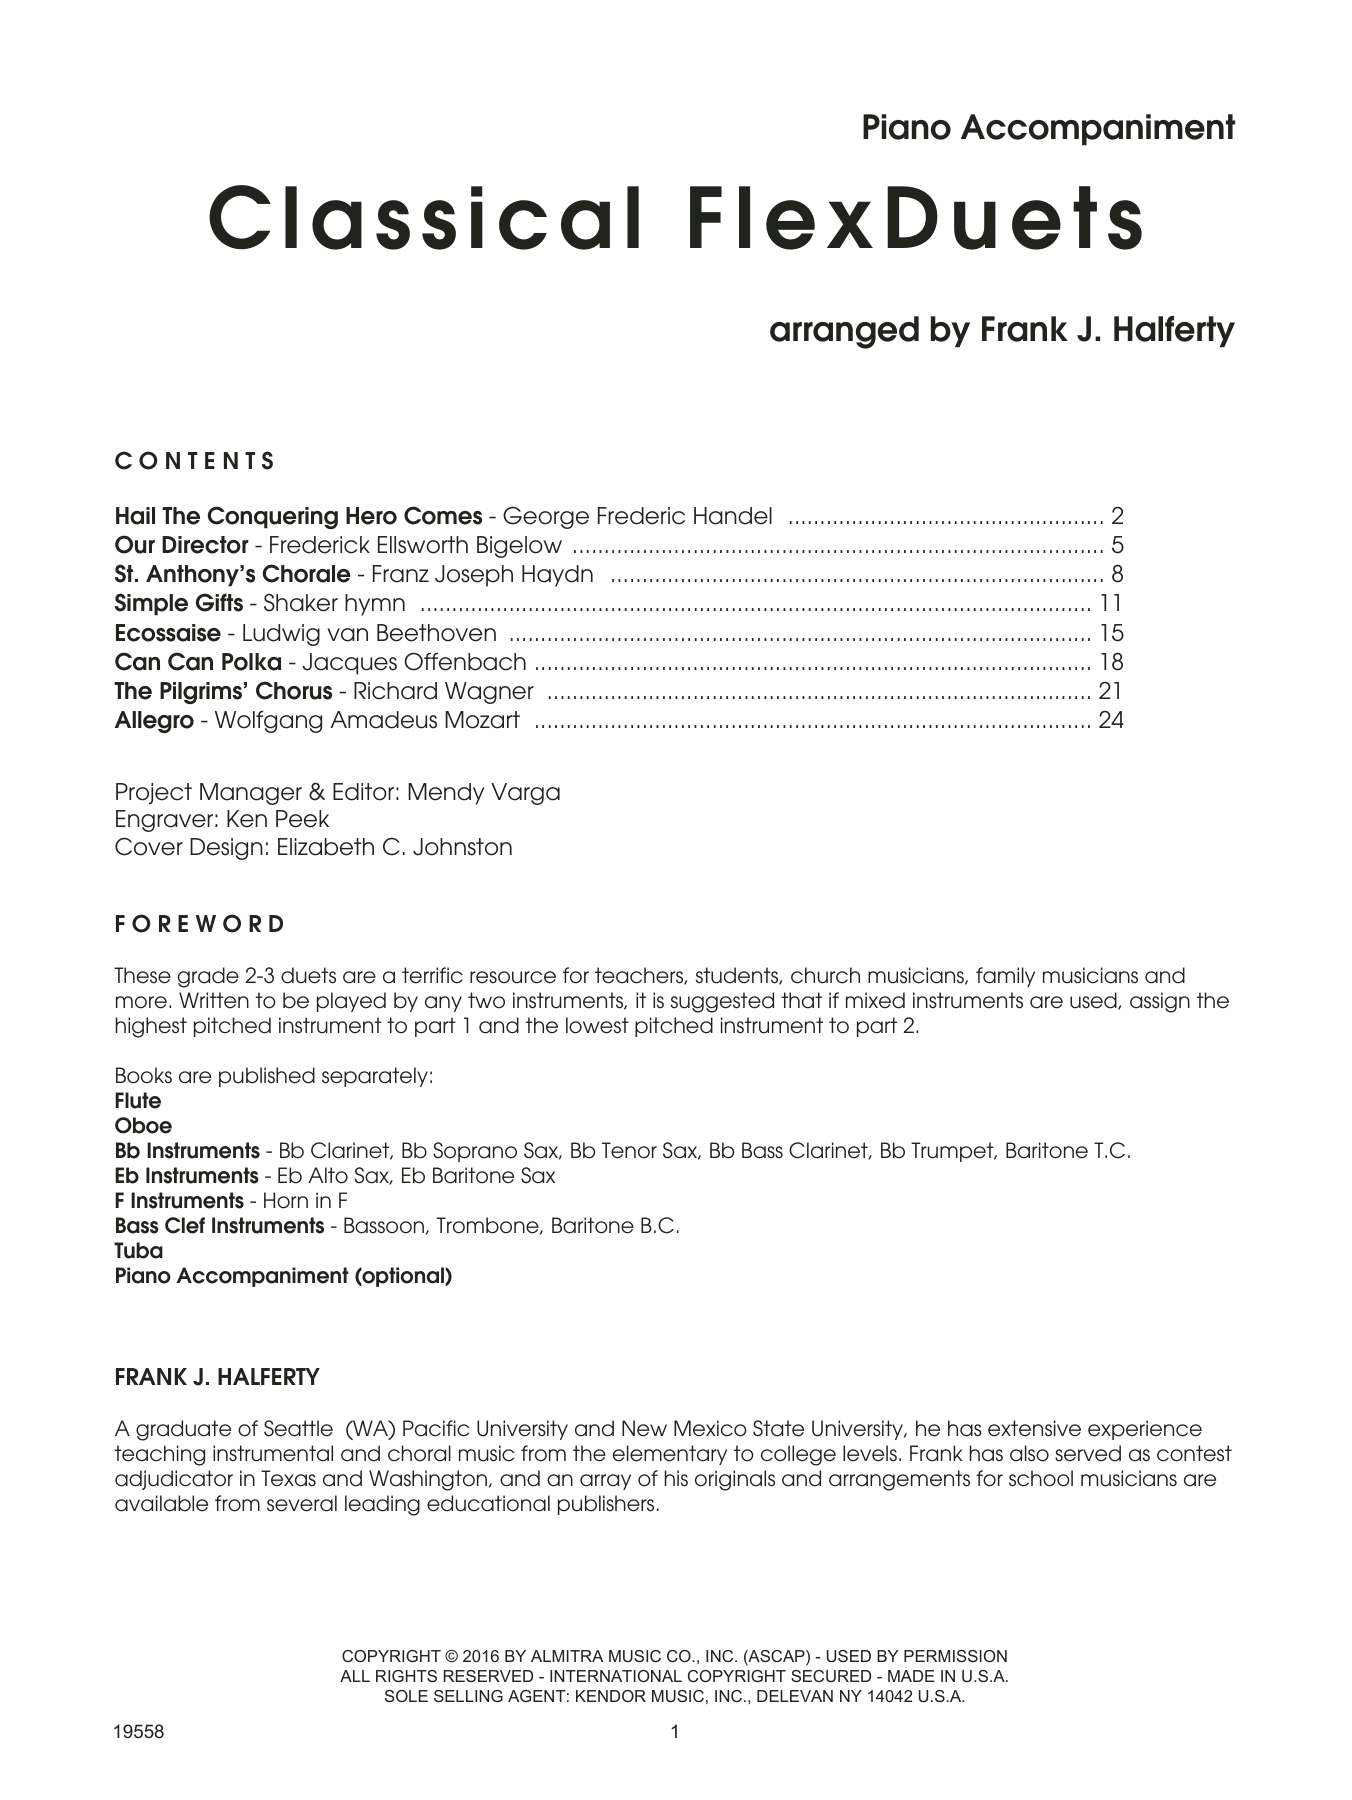 Classical FlexDuets - Piano Accompaniment (optional) sheet music